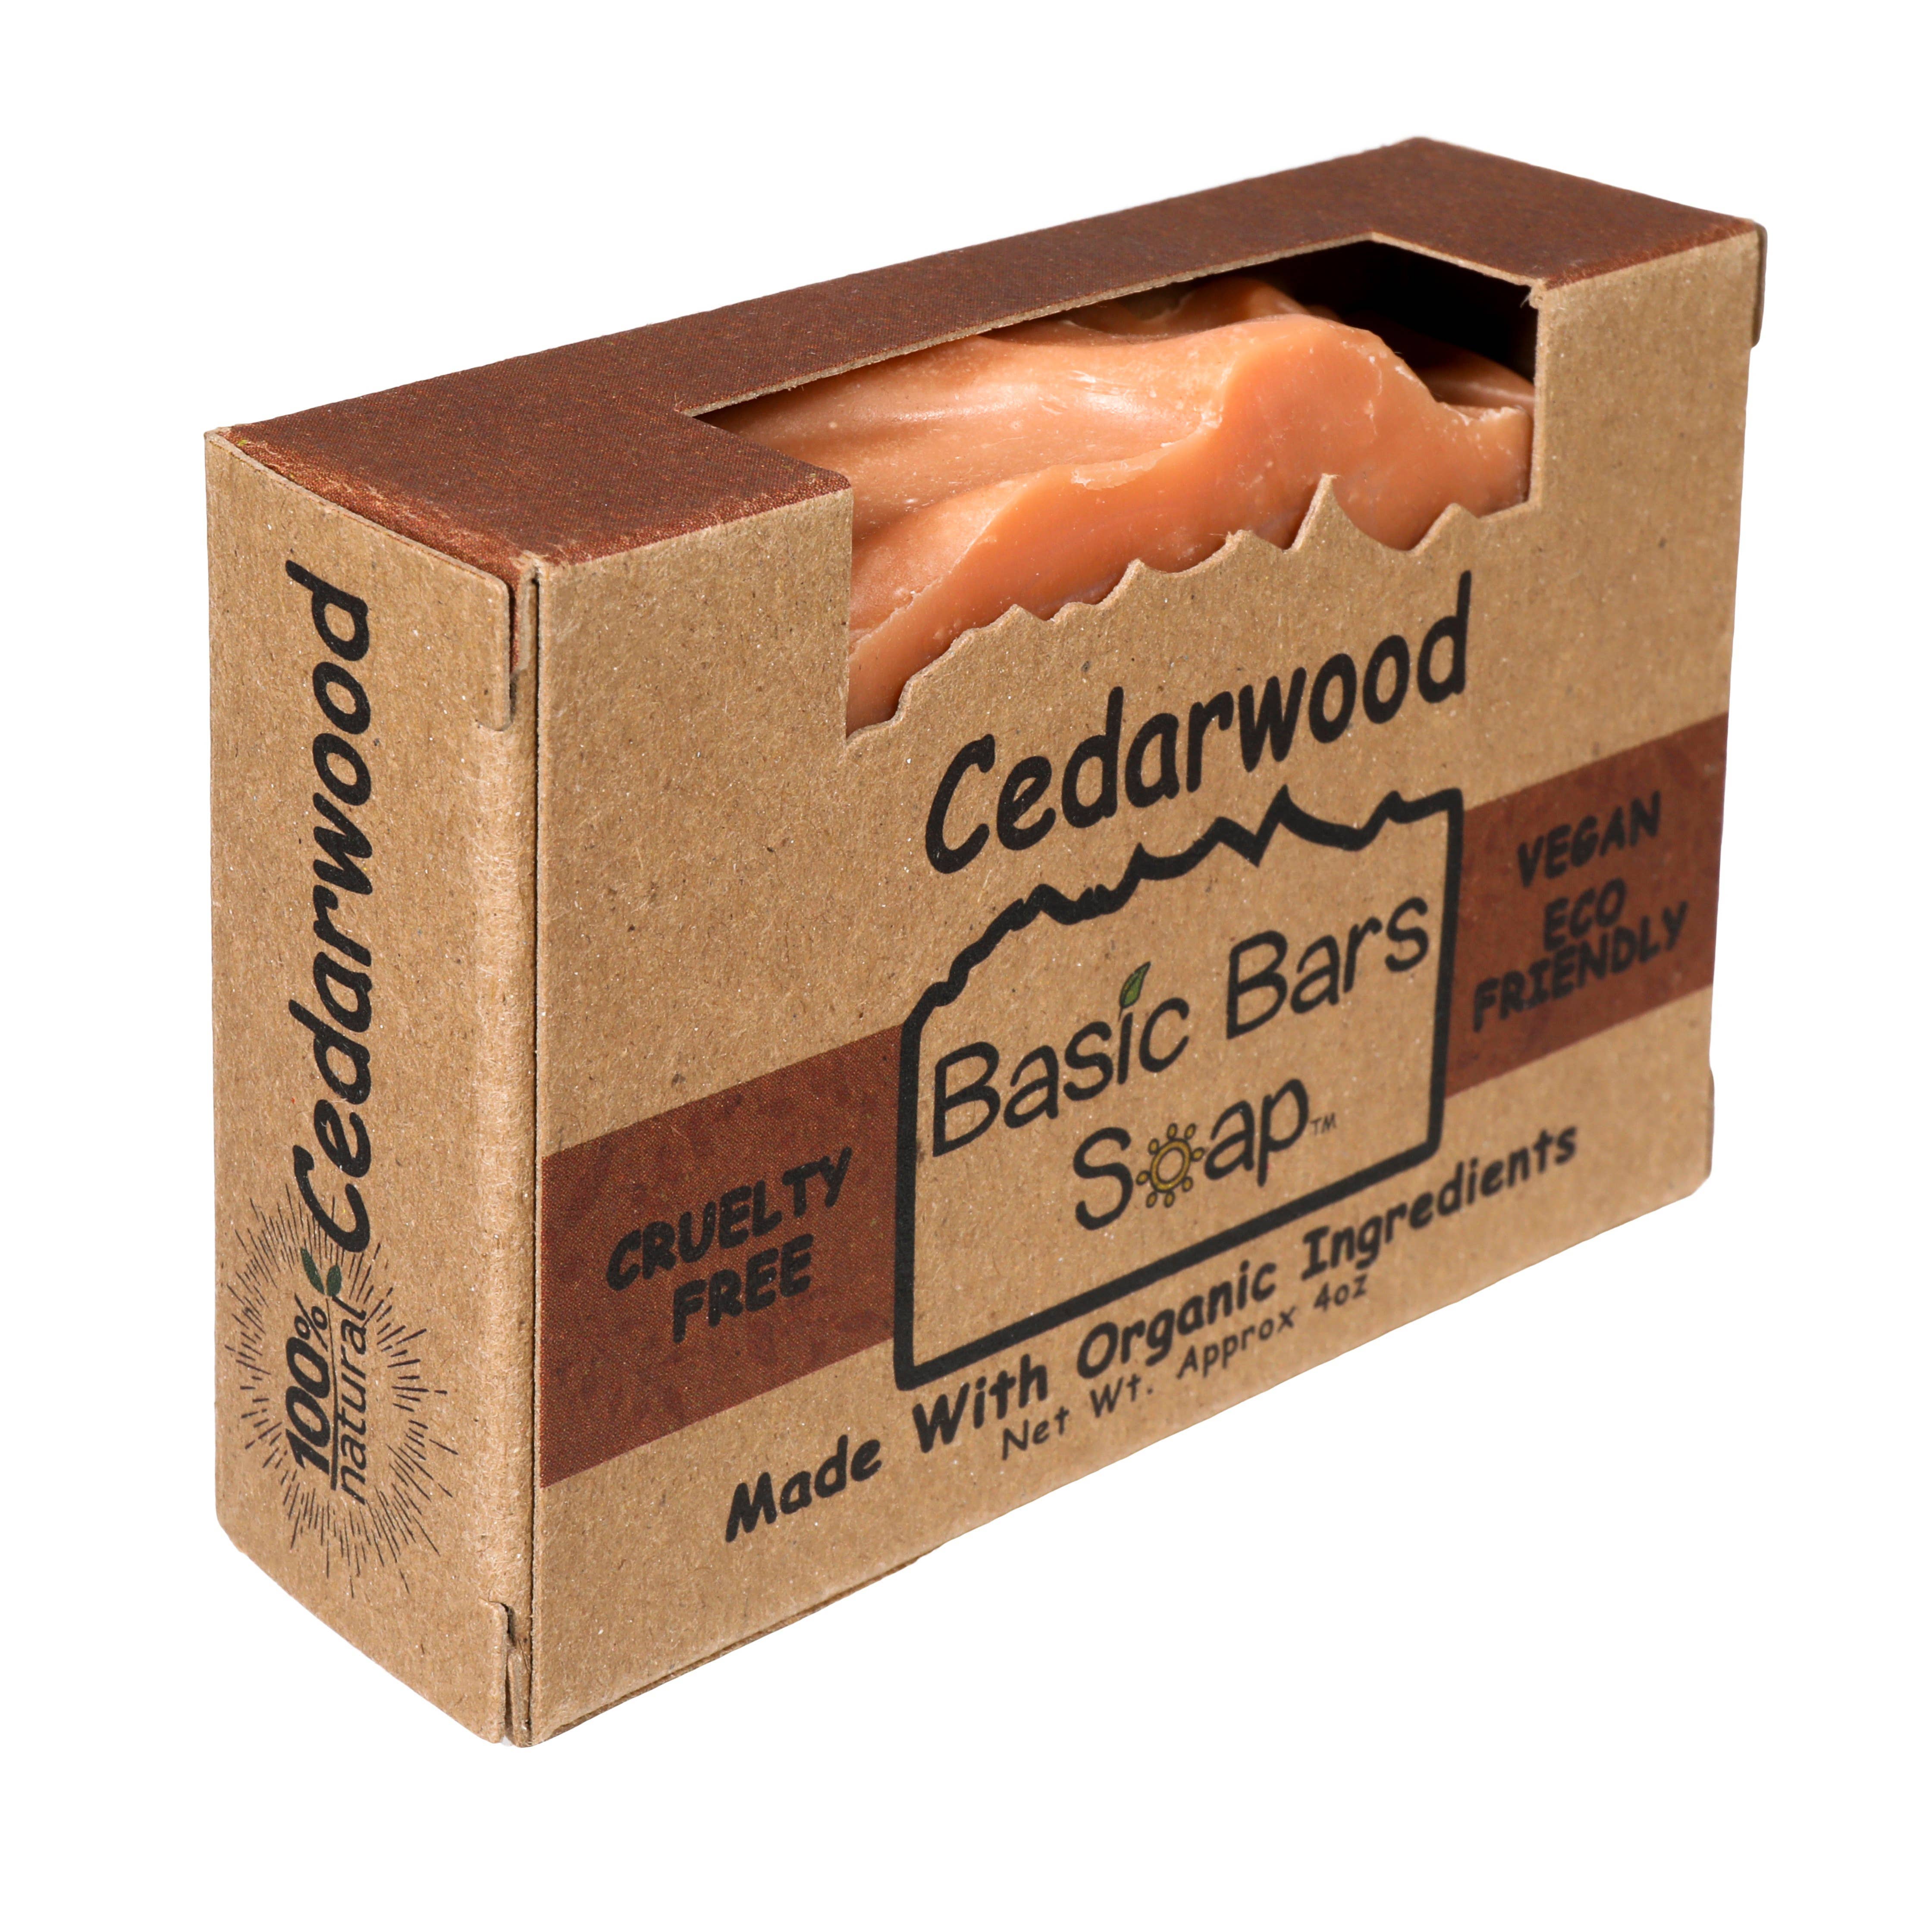 Working Hands hand soap bar– Cedarwood Soap